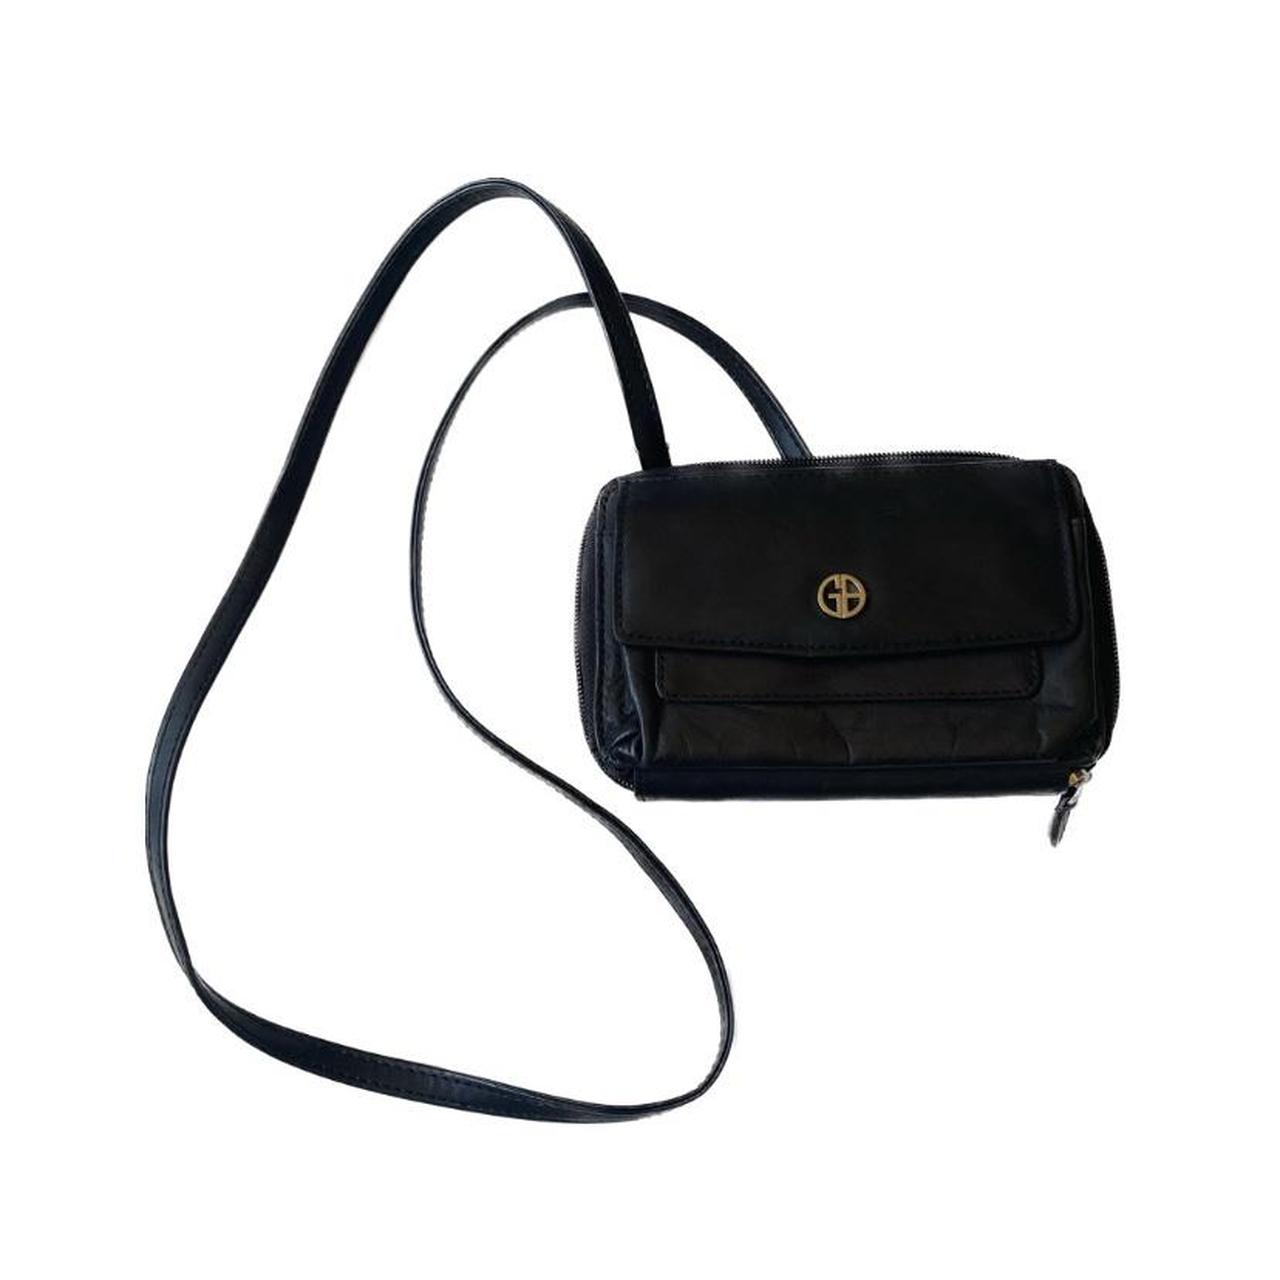 Giani Bernini Women's Crossbody Bags - Black